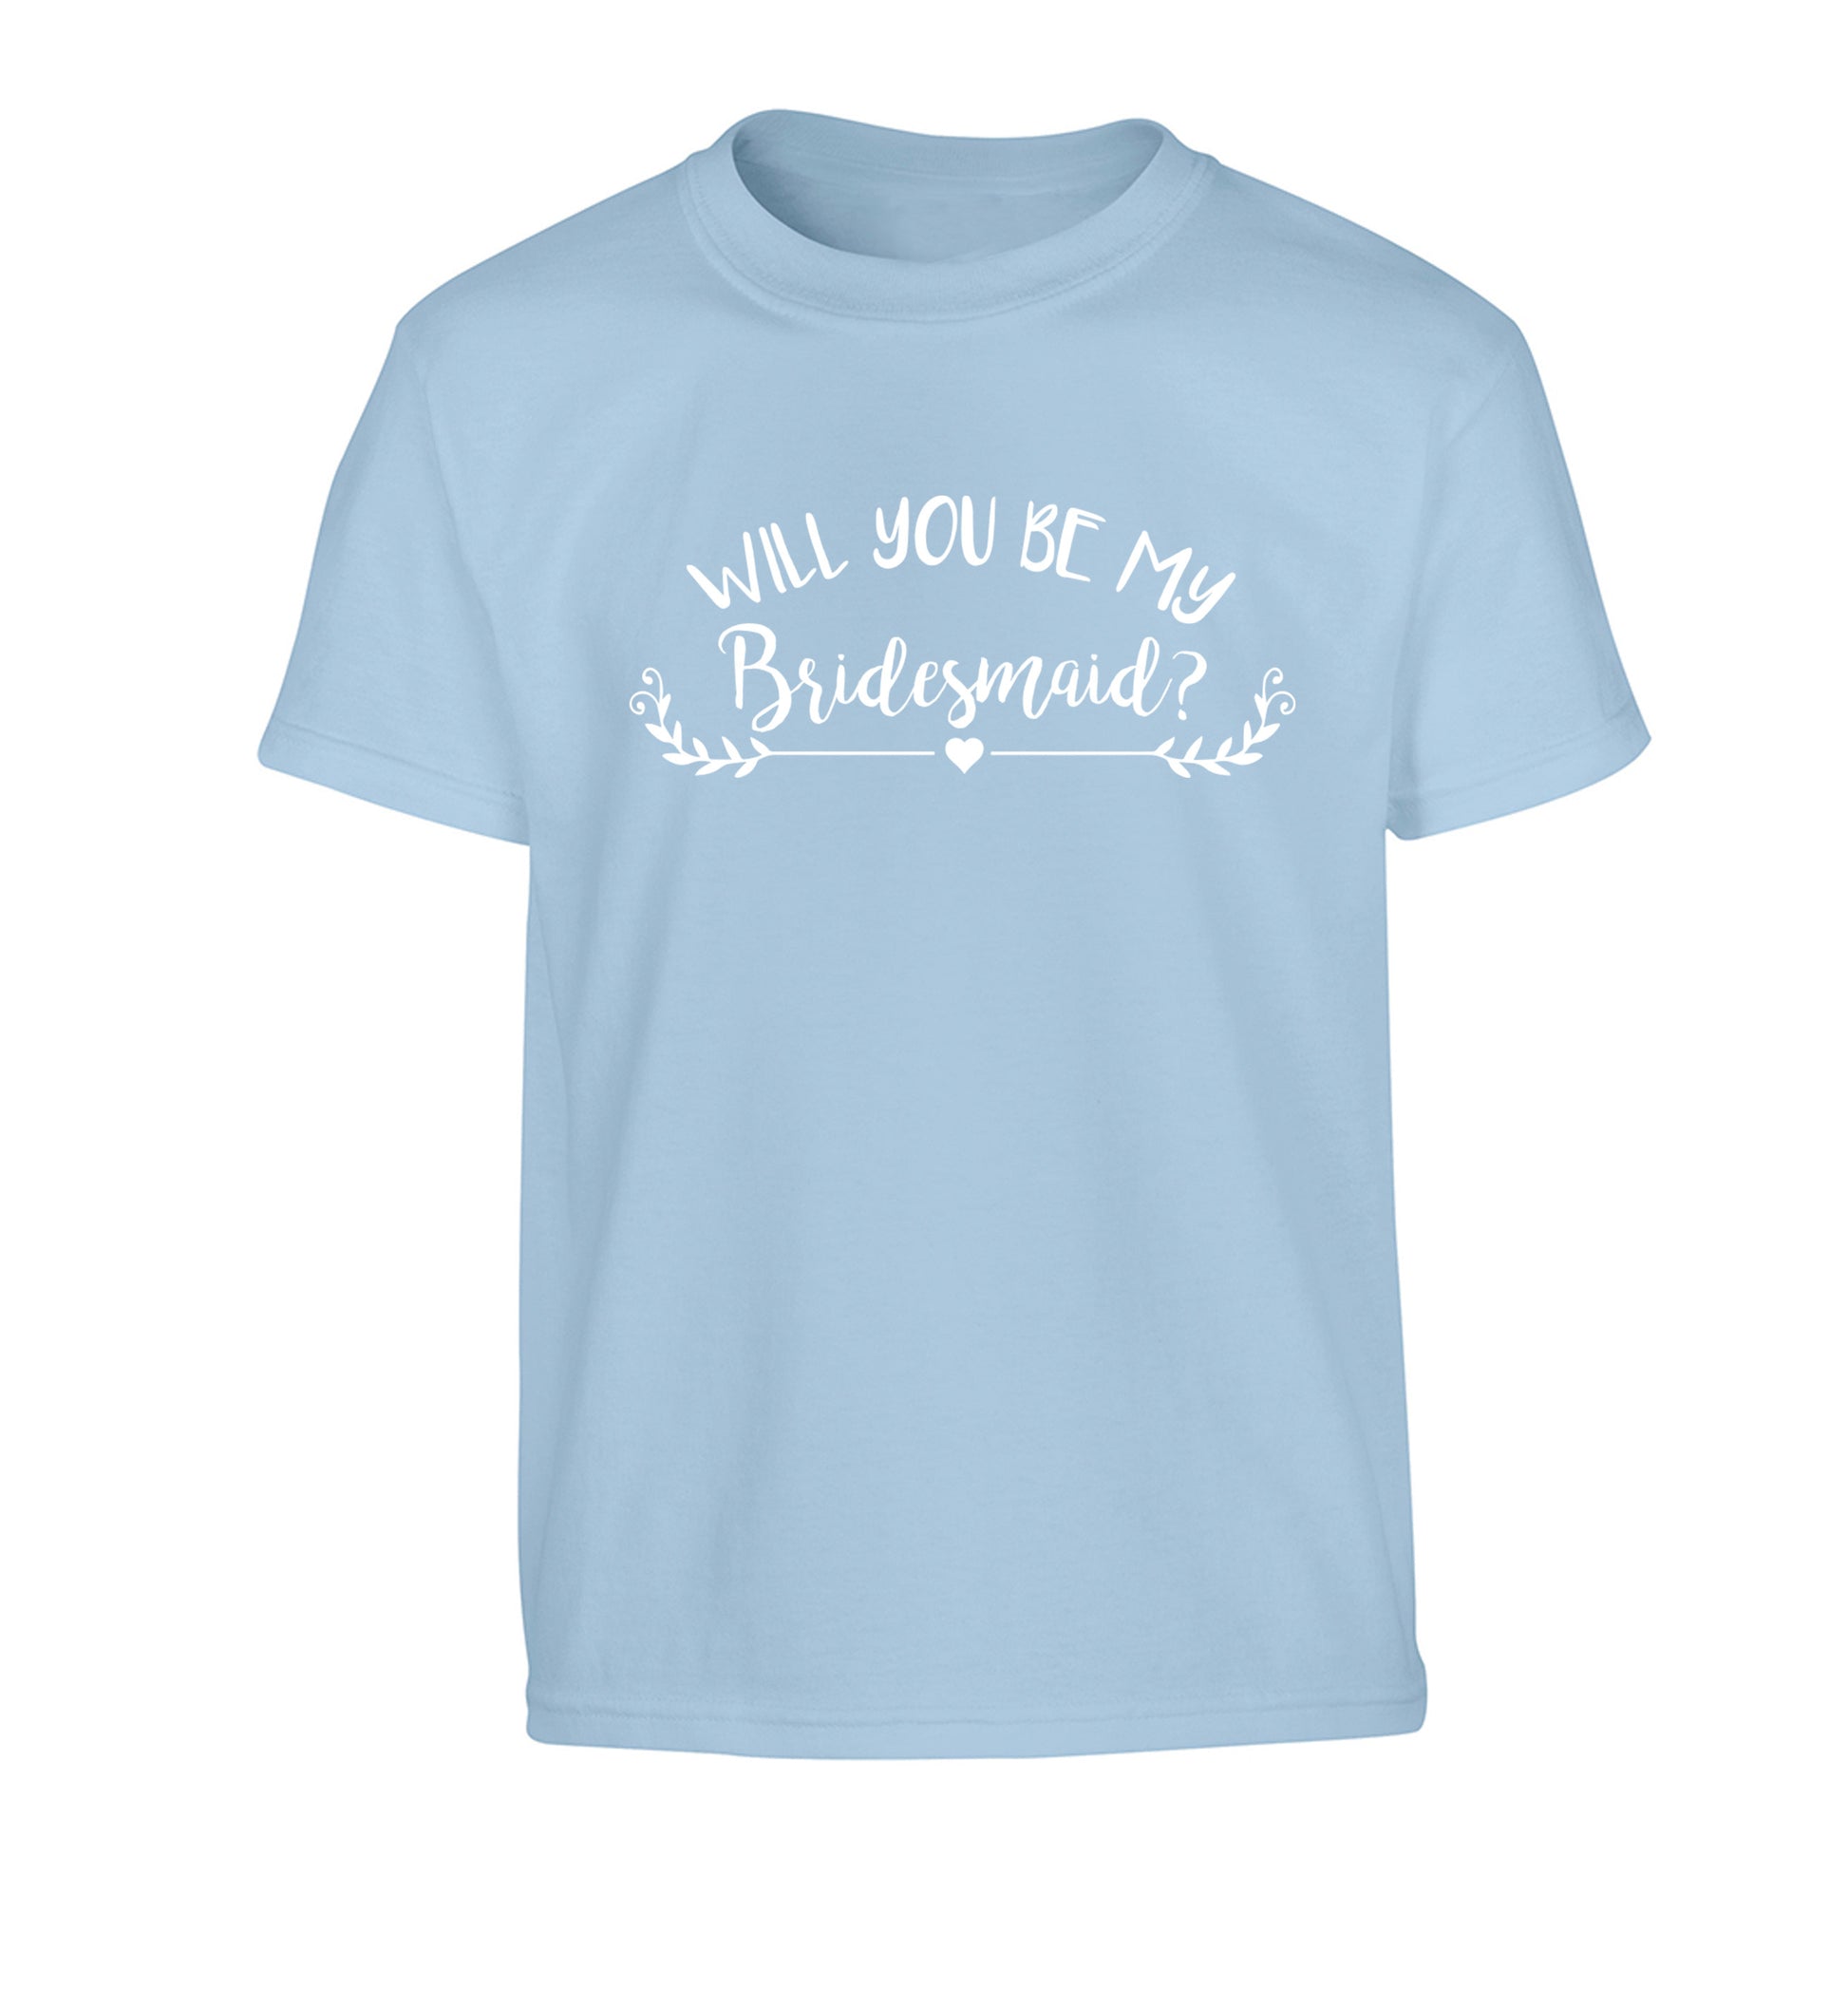 Will you be my bridesmaid? Children's light blue Tshirt 12-14 Years